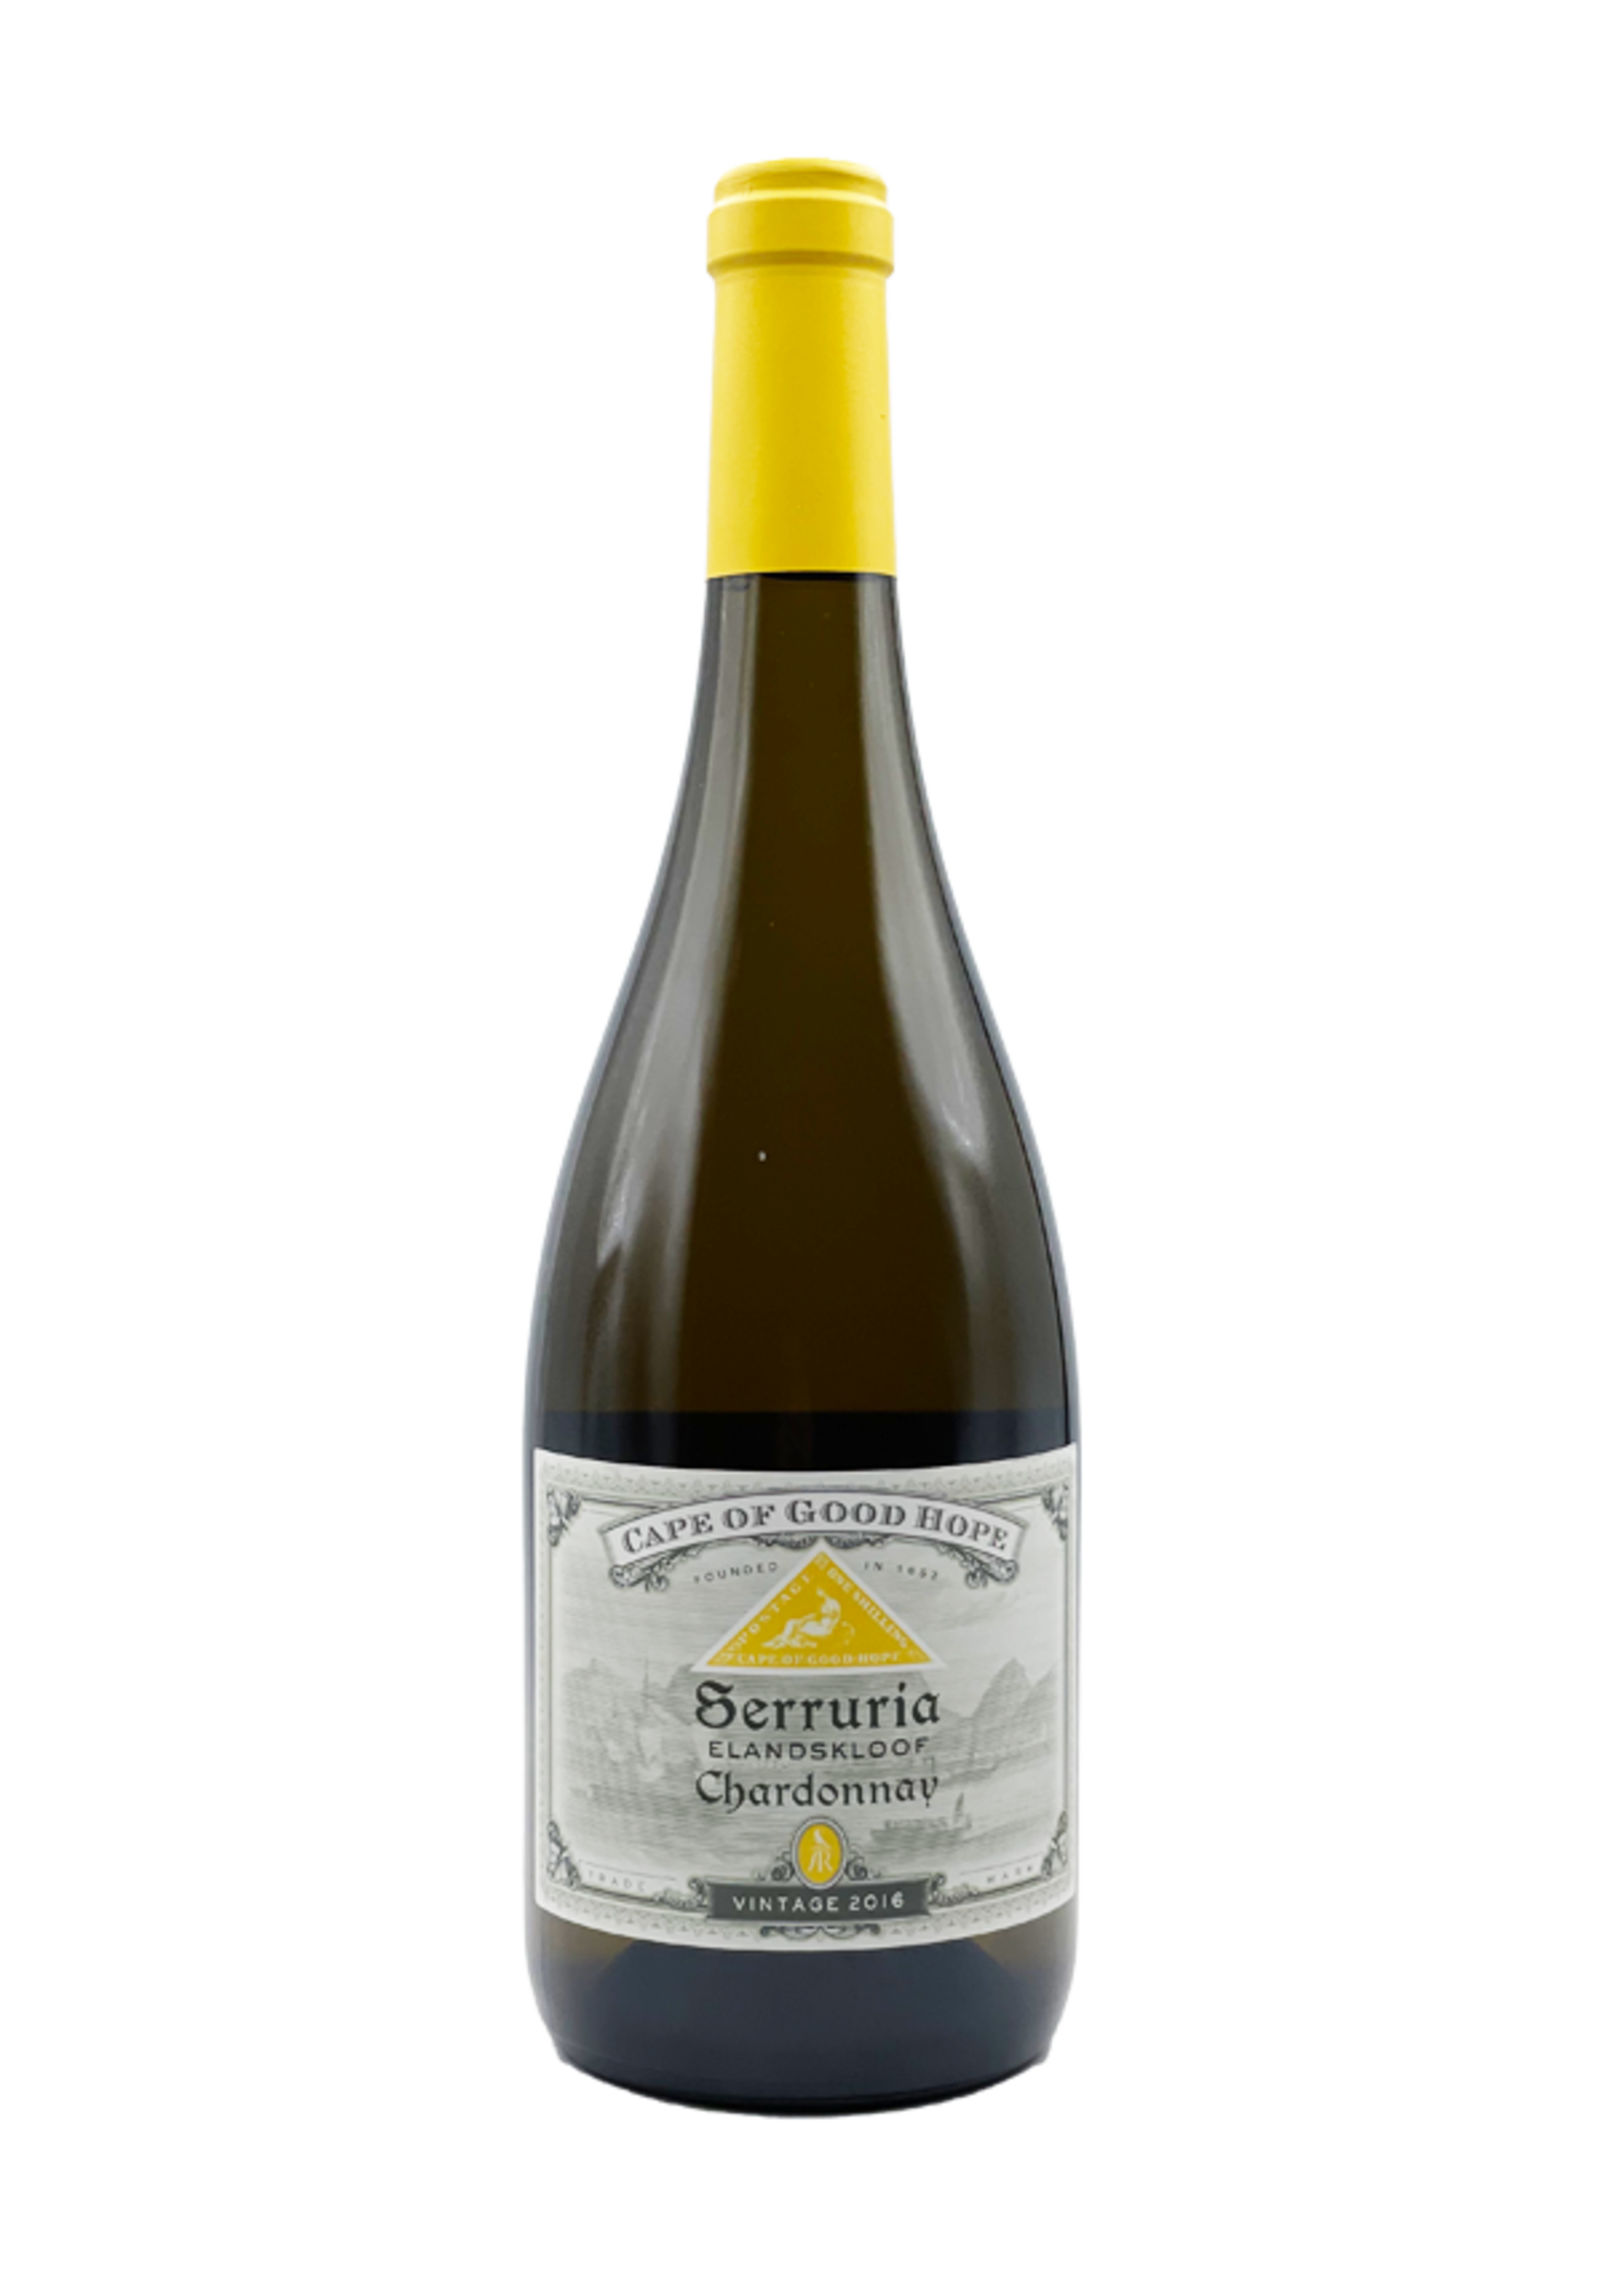 Cape of Good Hope Chardonnay "Serruria" 2016 Cape of Good Hope